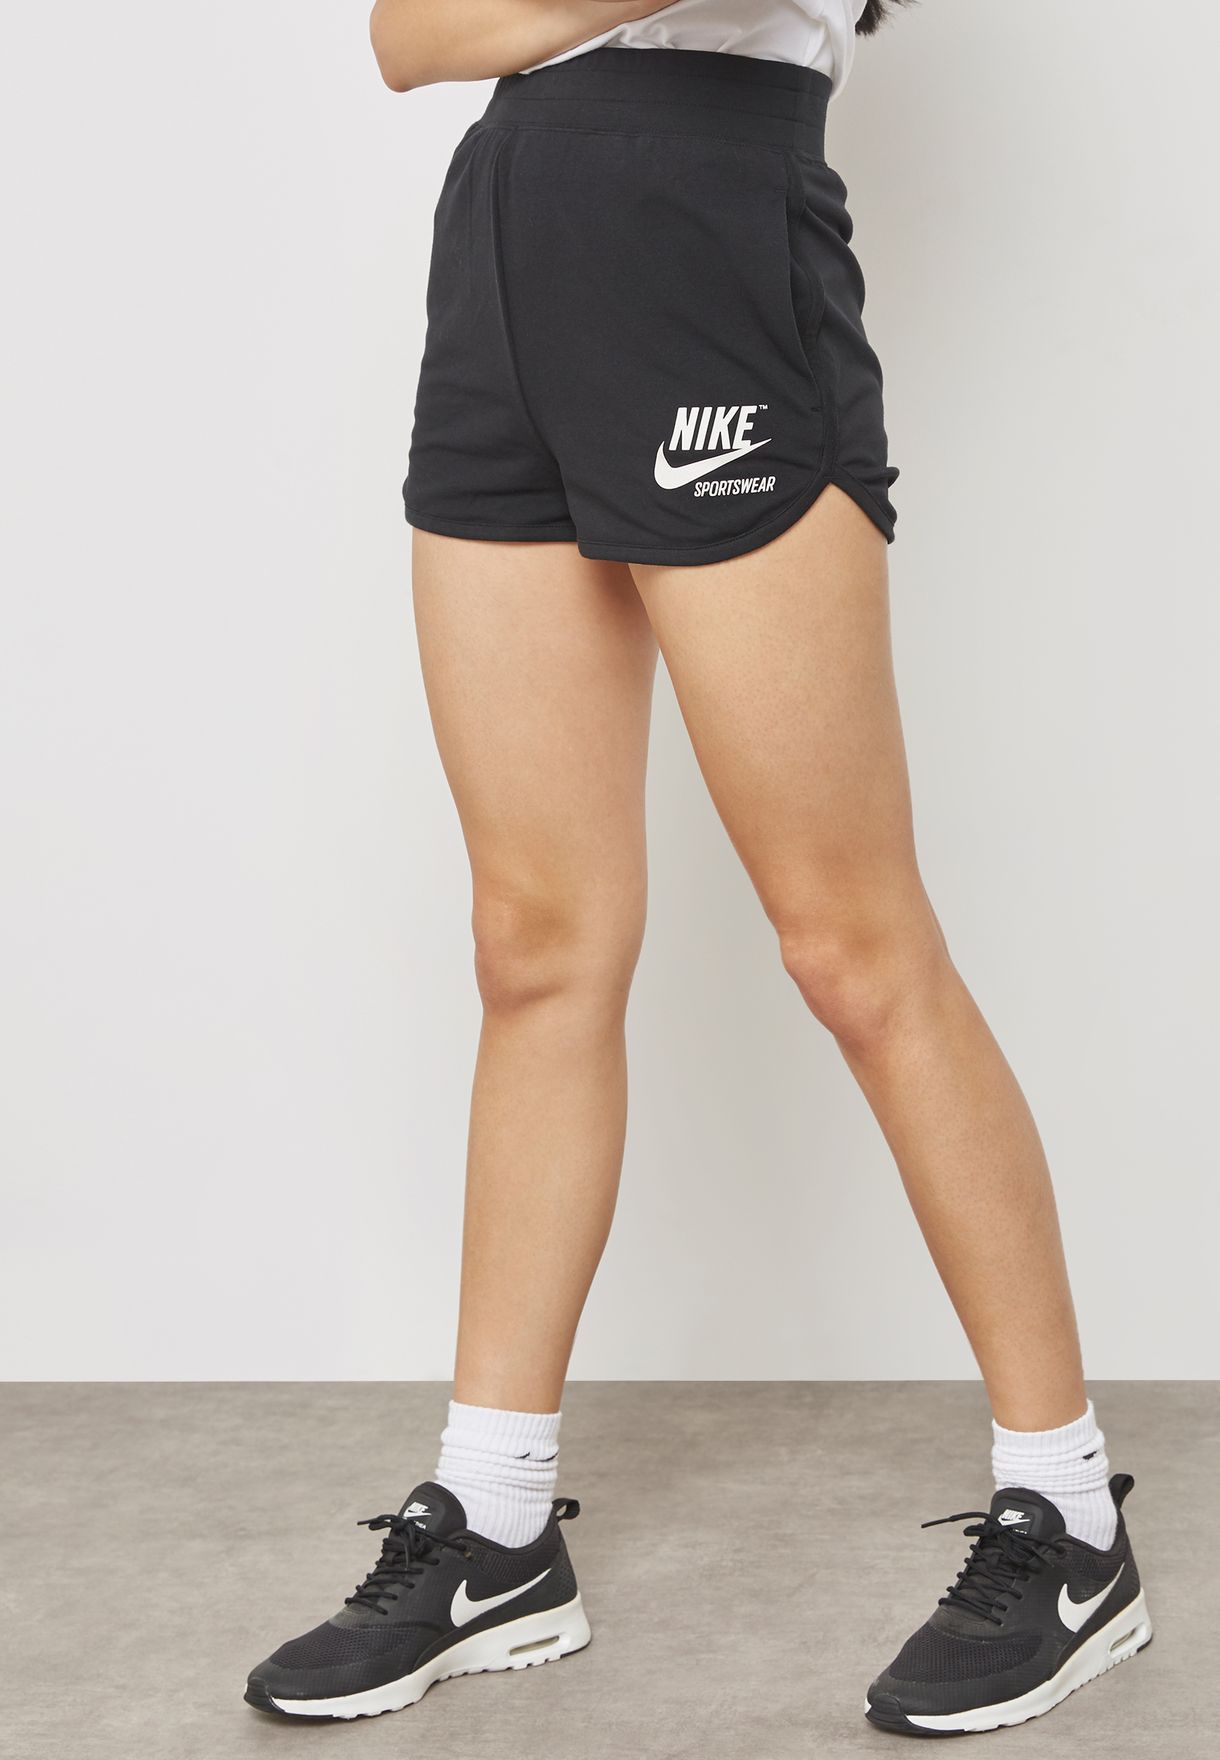 nike high shorts cheap online